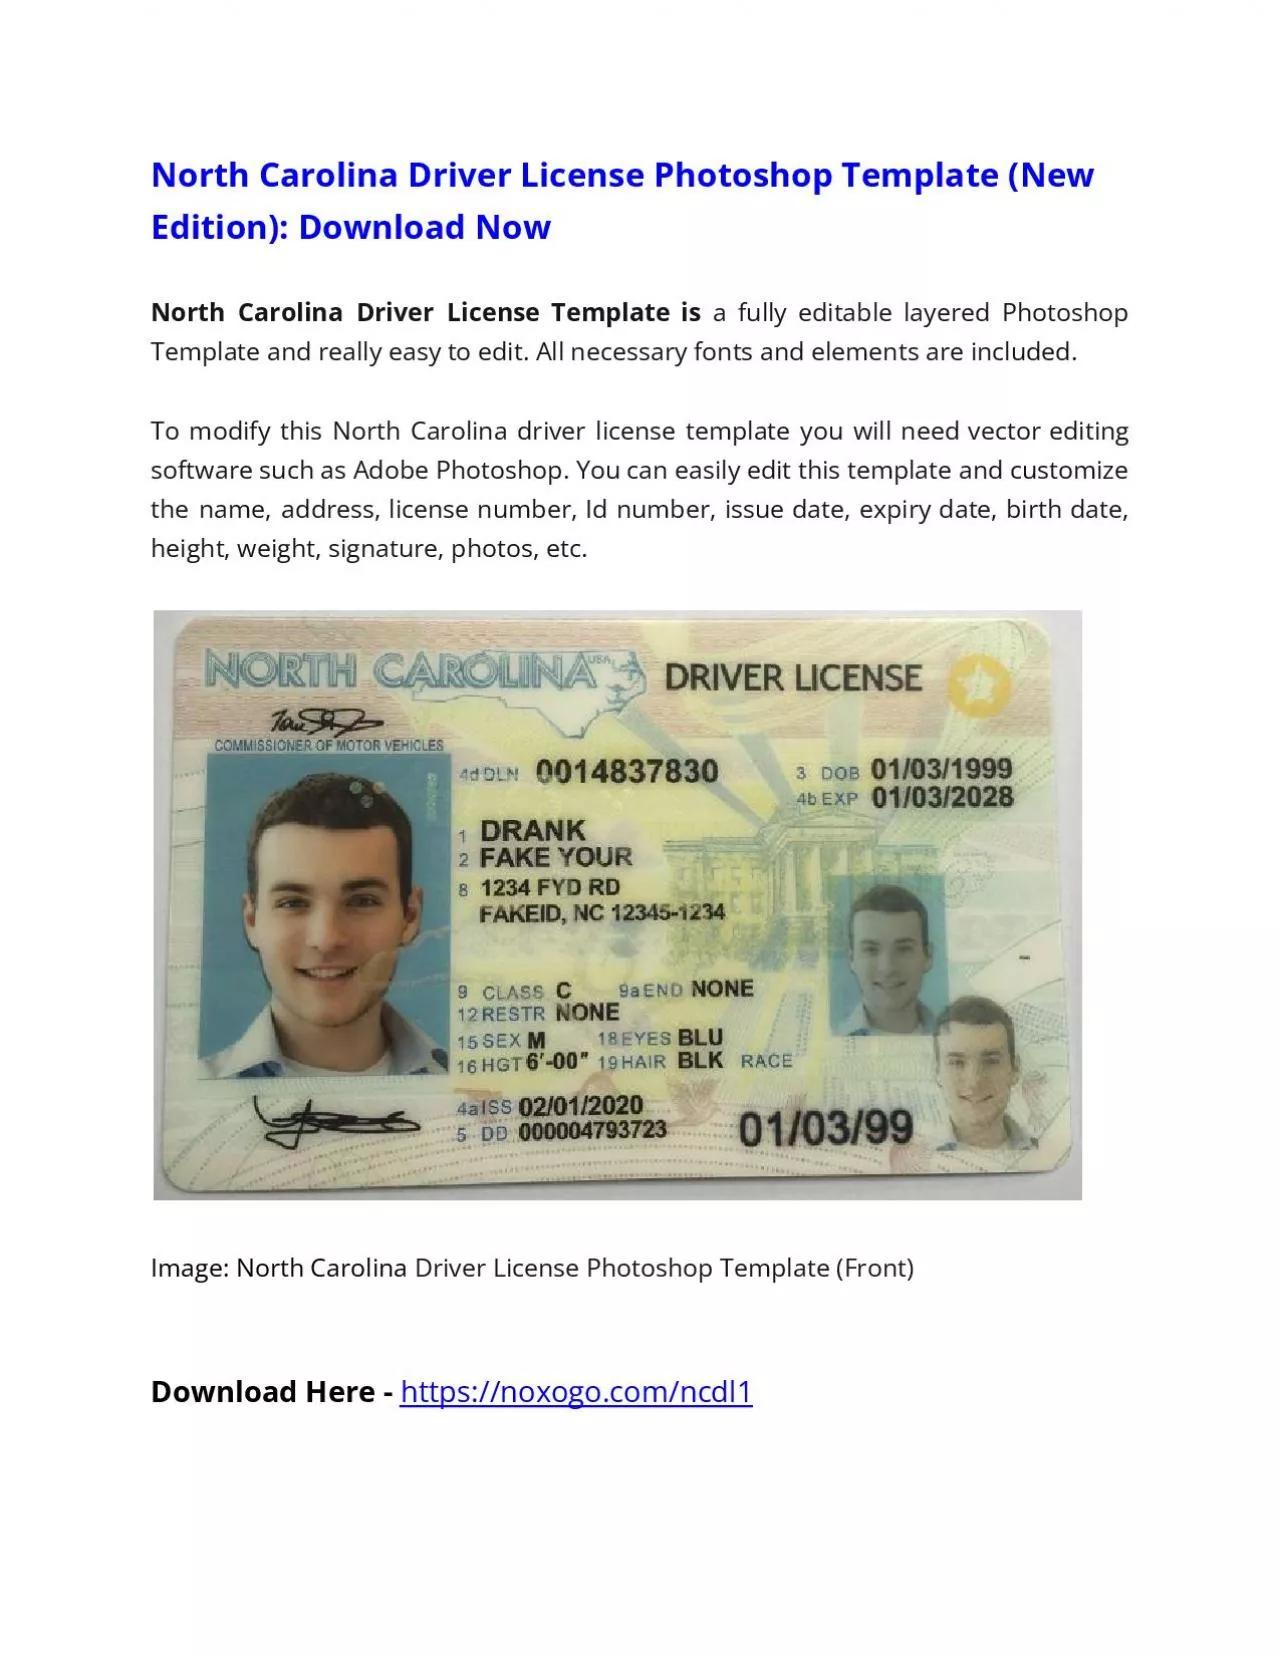 North Carolina Driver License Photoshop Template (New Edition)